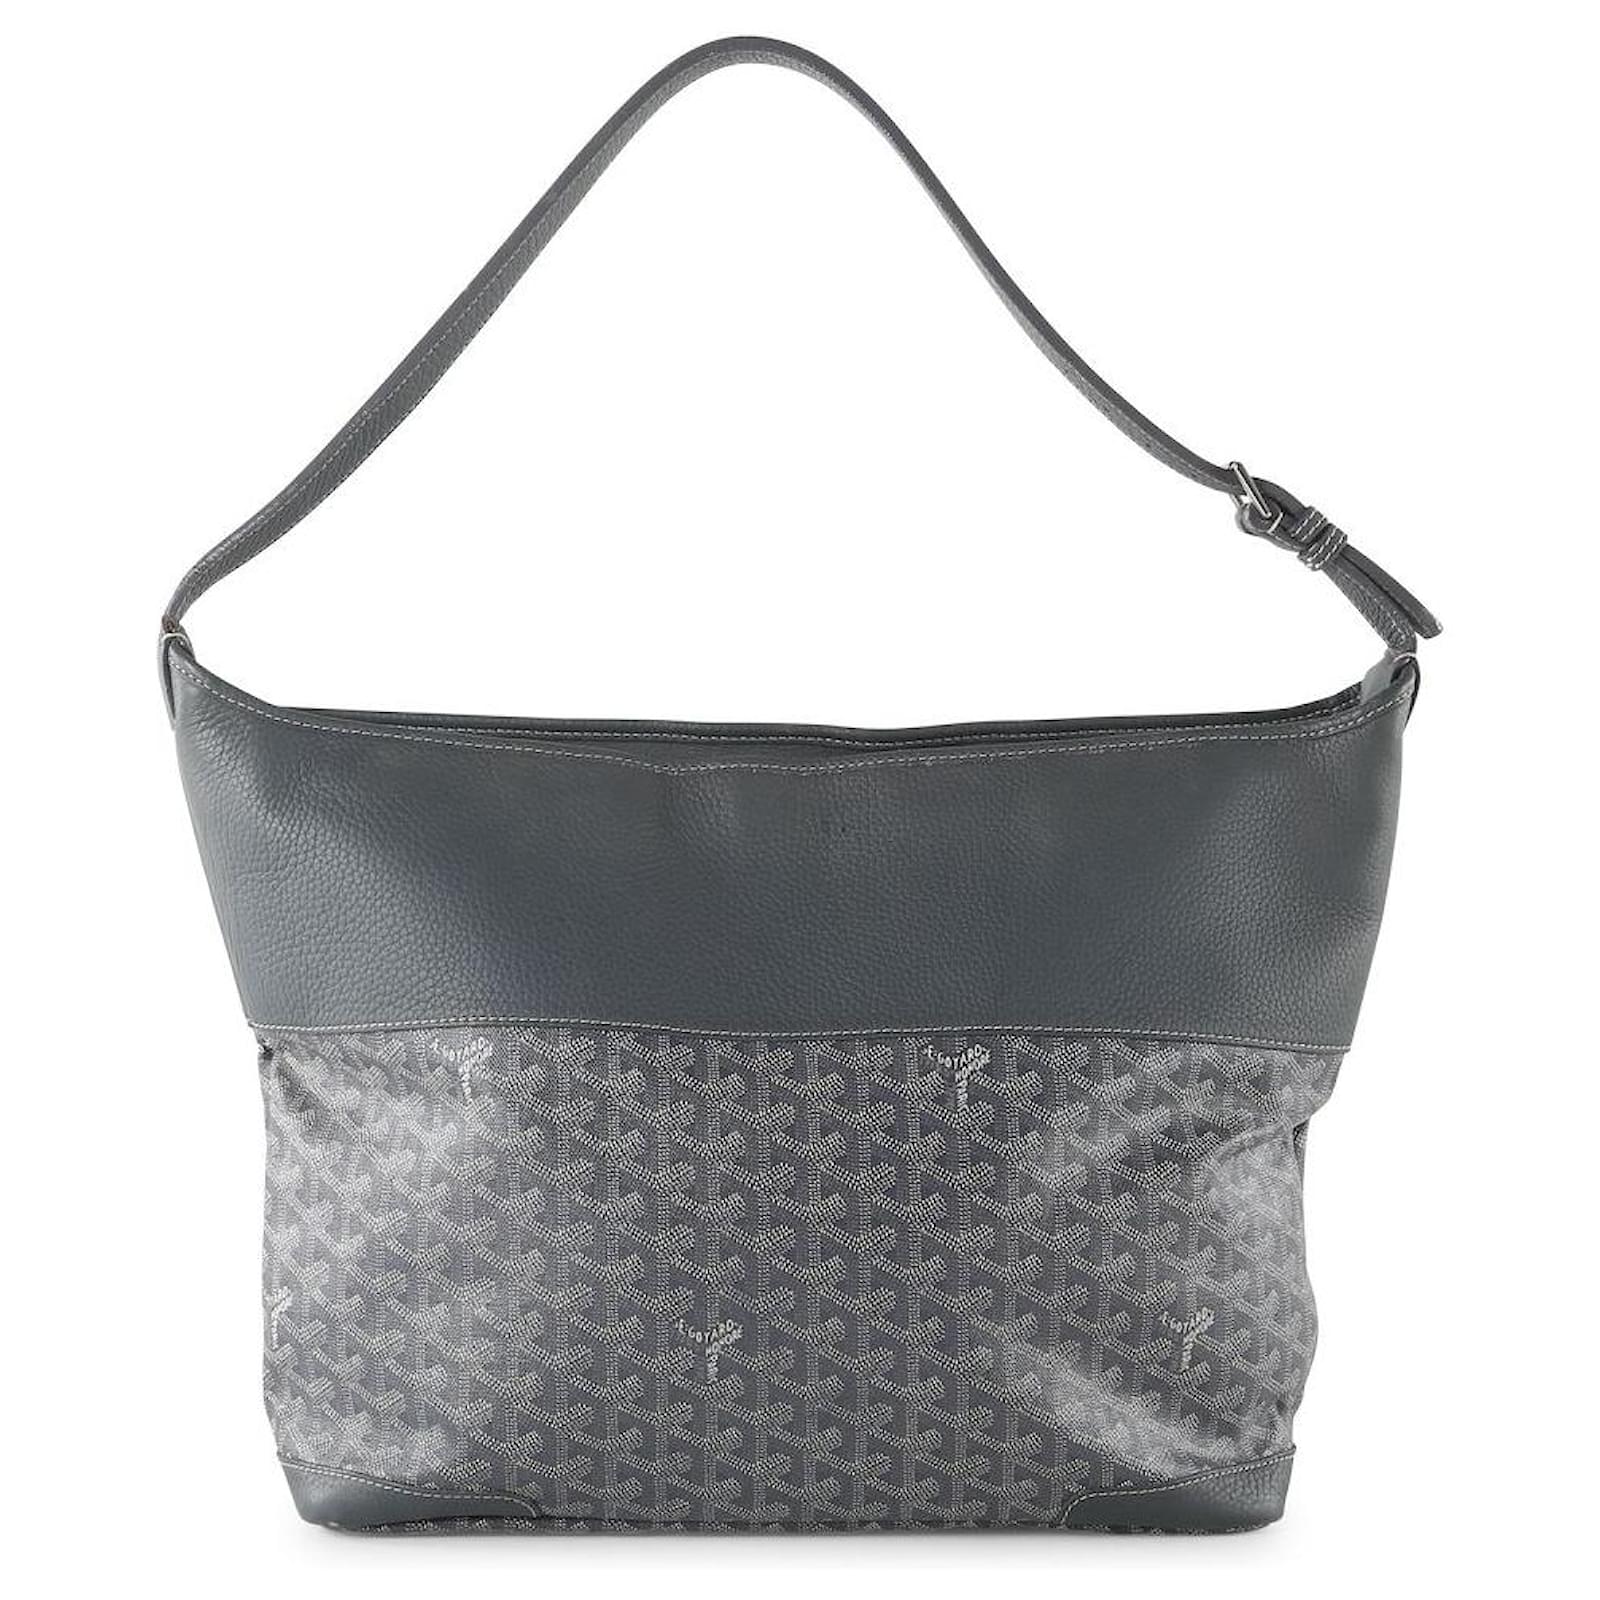 grey goyard messenger bag